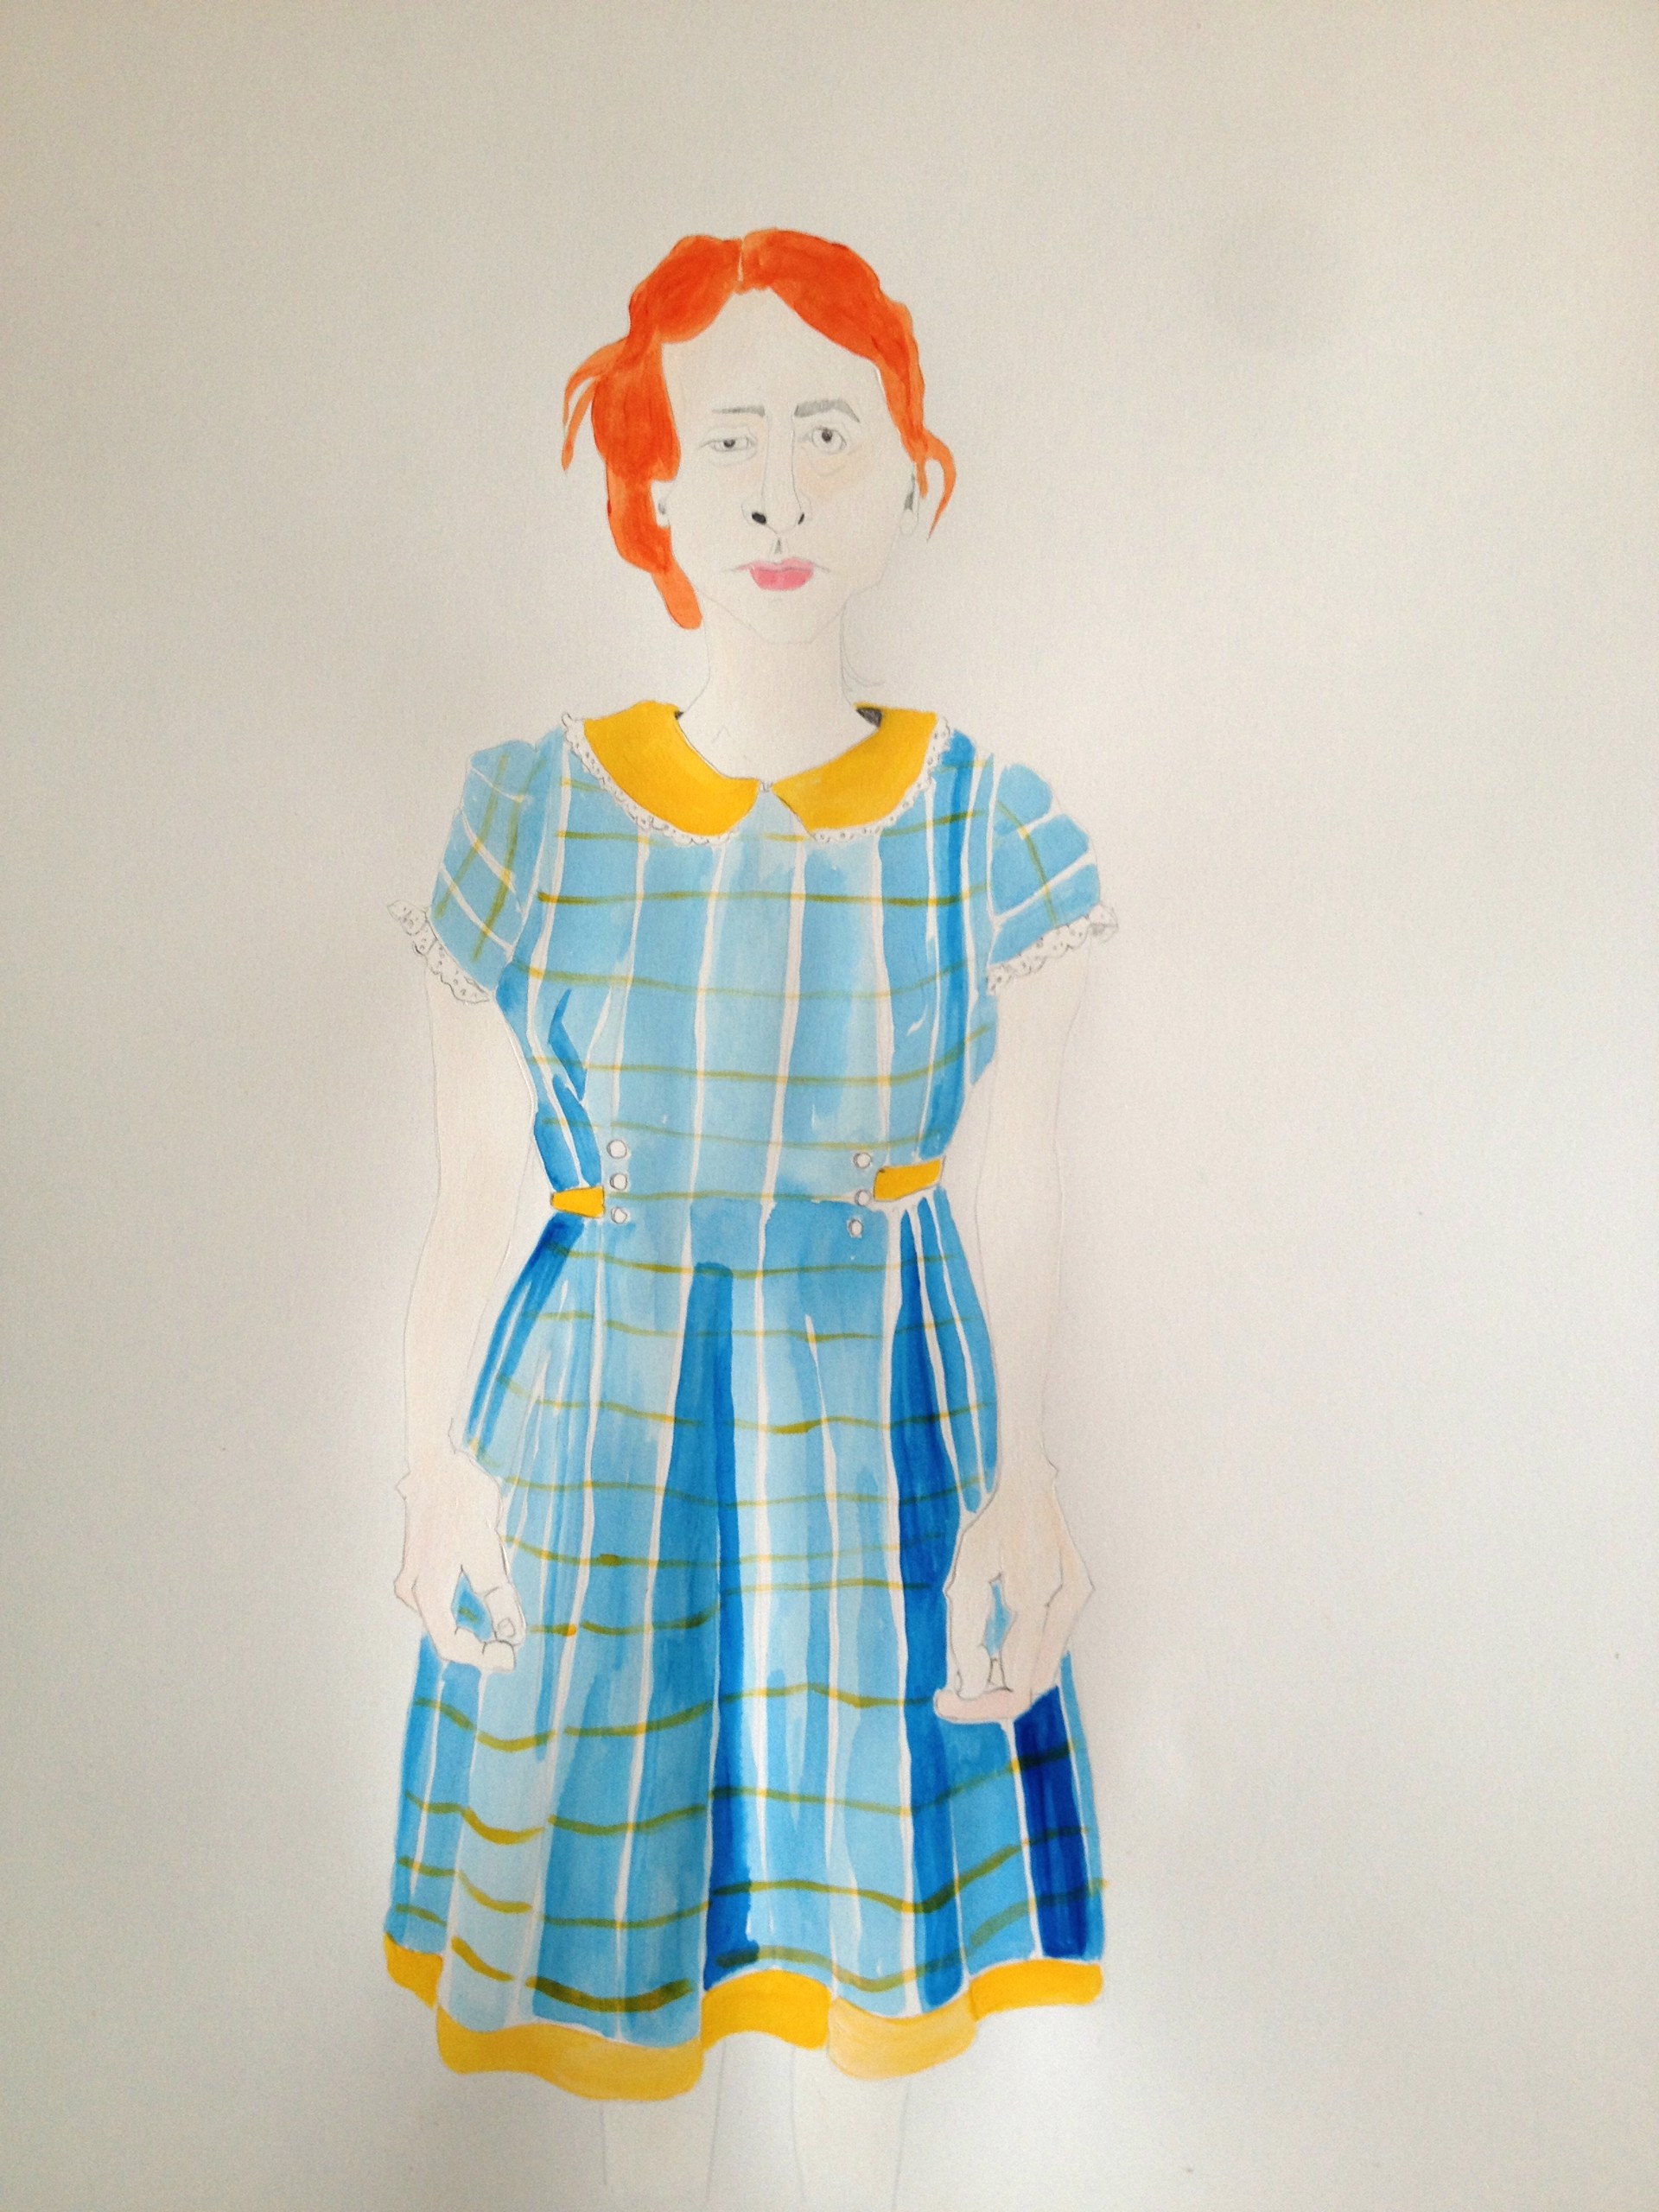 Self-Portrait Blue and White Plaid Dress by Rachael Van Dyke